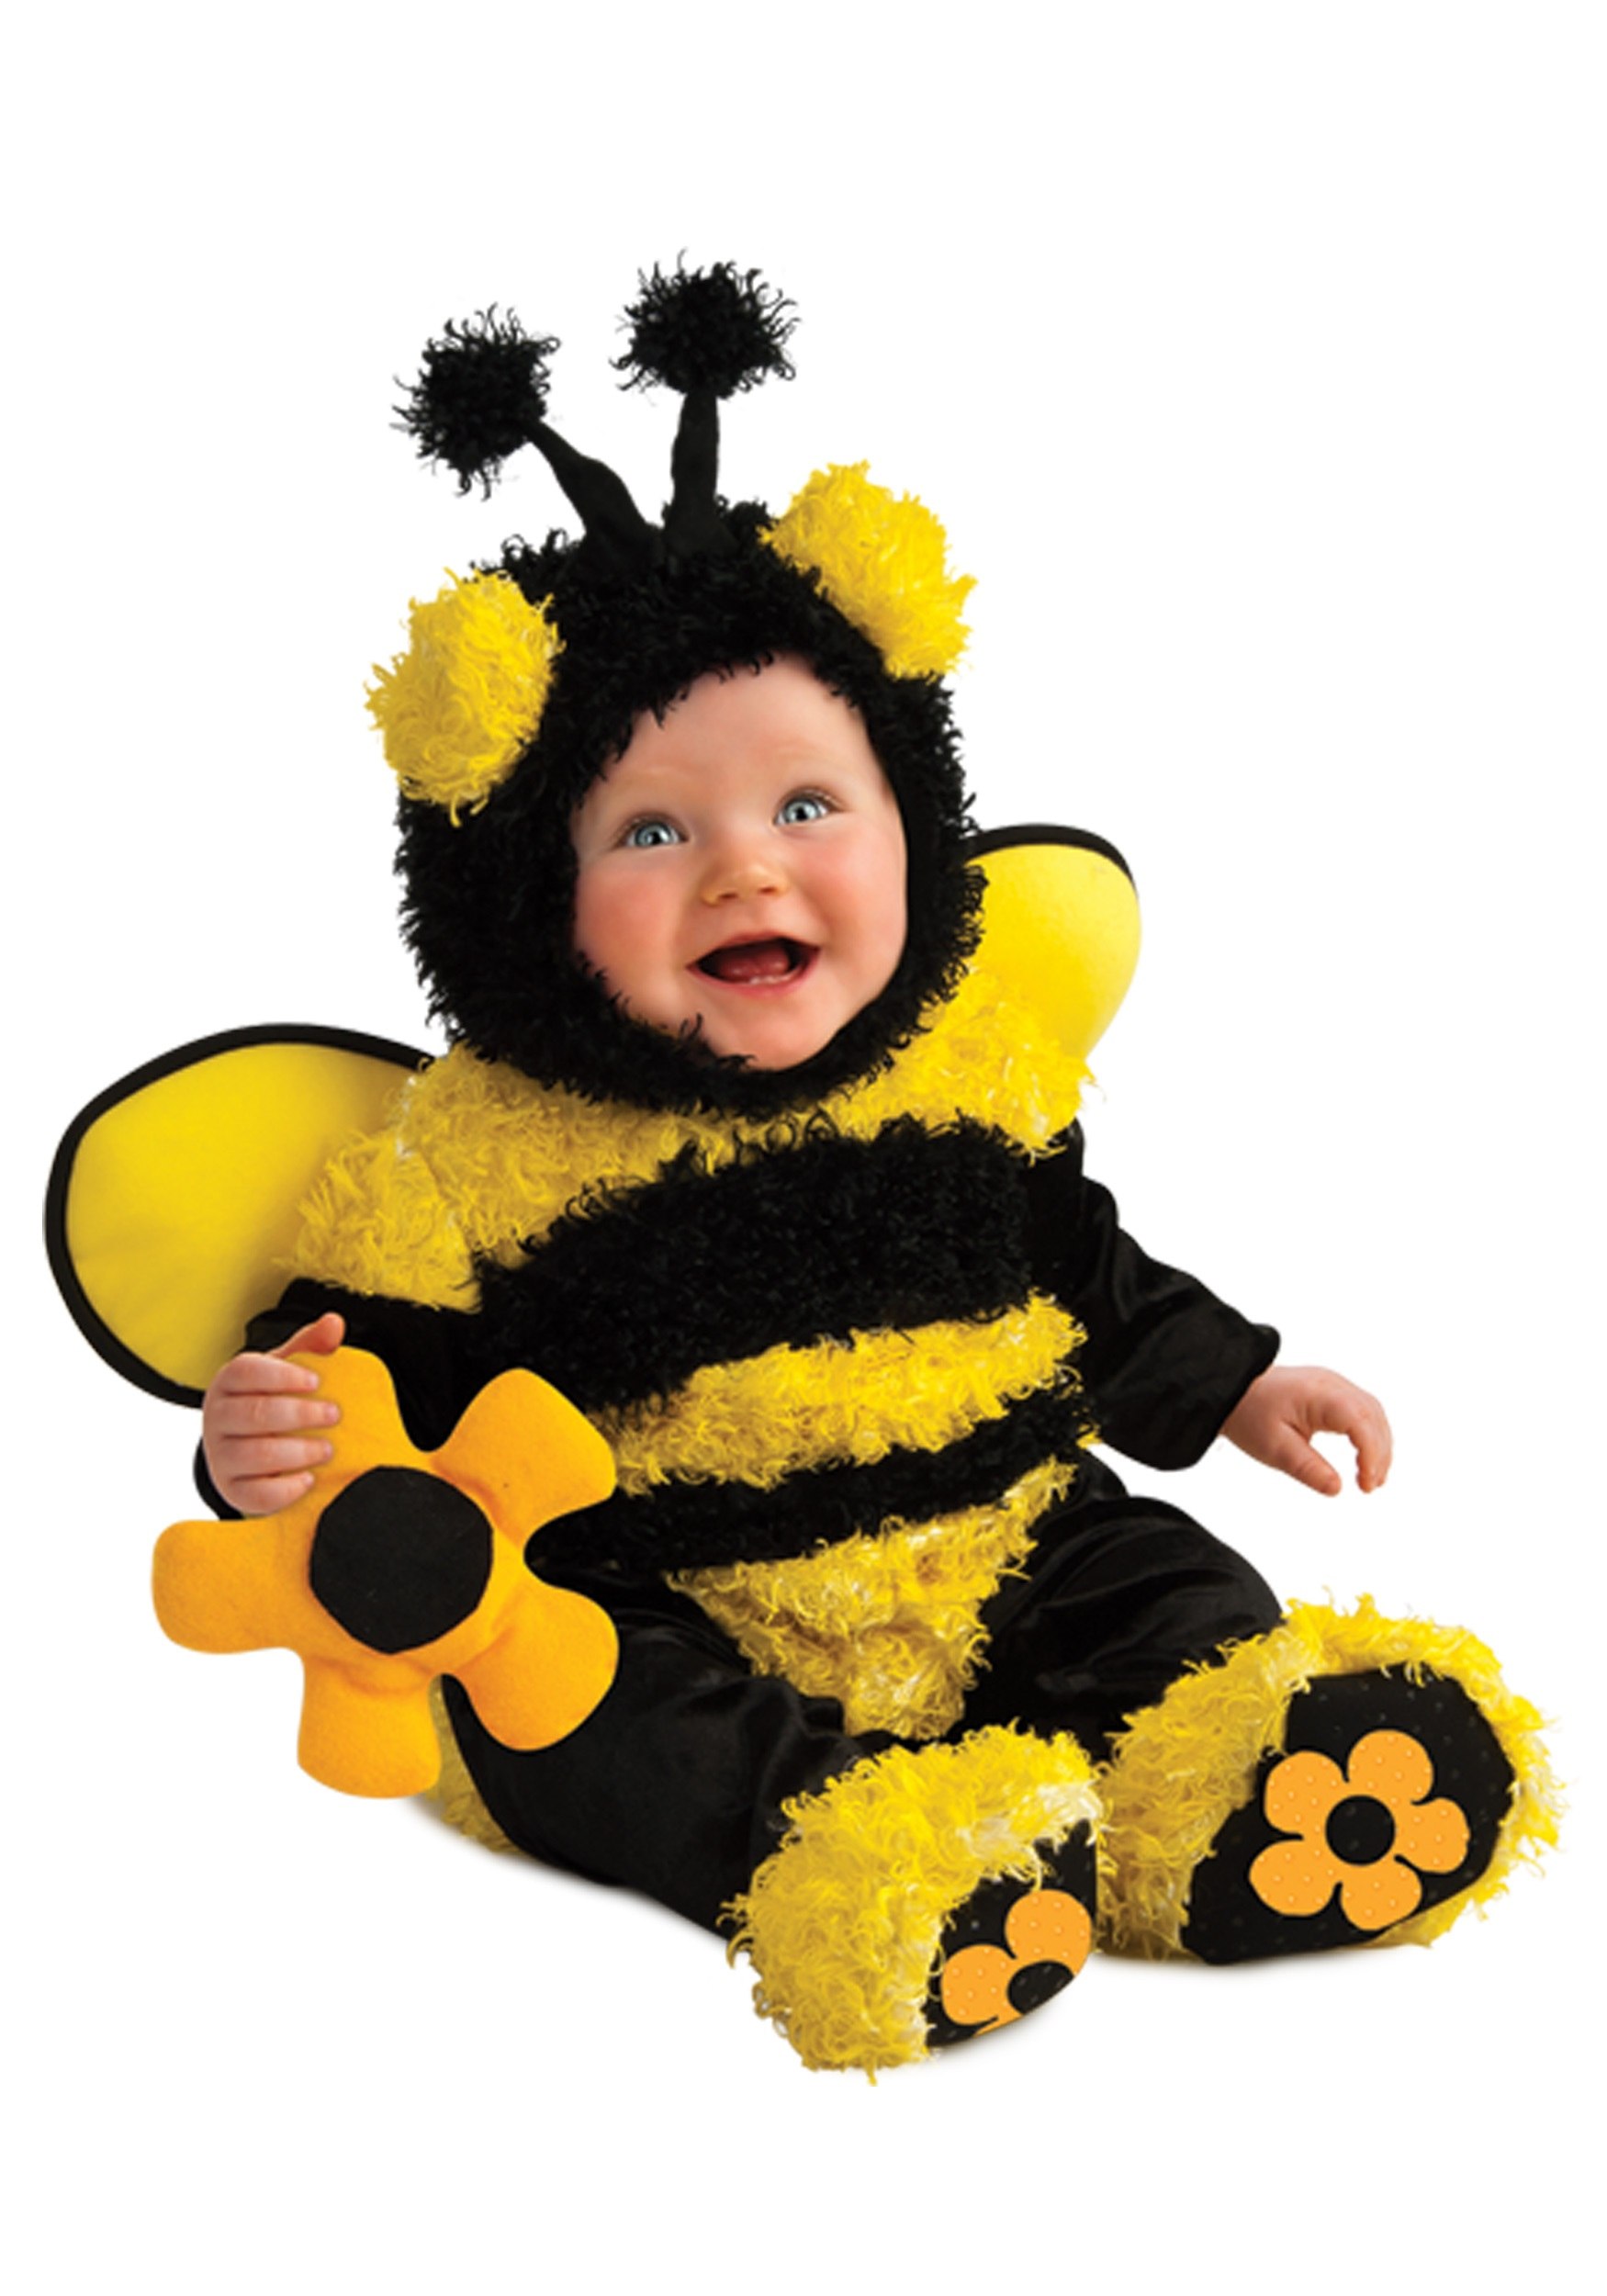 Одежда пчел. Костюм пчелки. Костюм пчелки для девочки. Костюм пчелки для мальчика. Малыш в костюме пчелки.